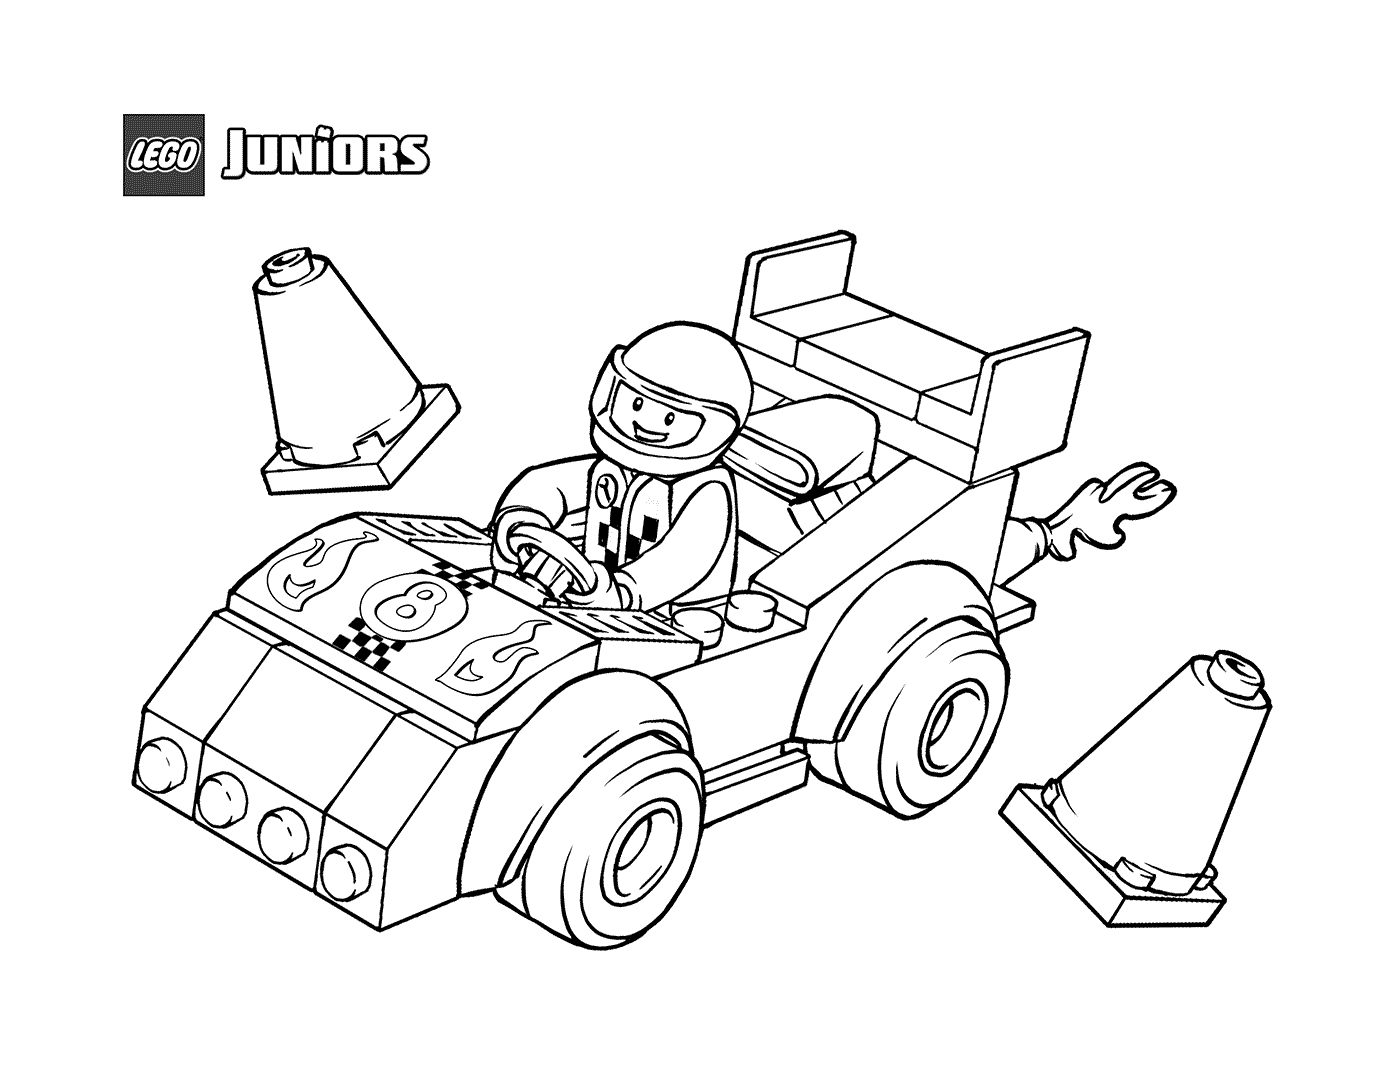  LEGO Junior racing car 